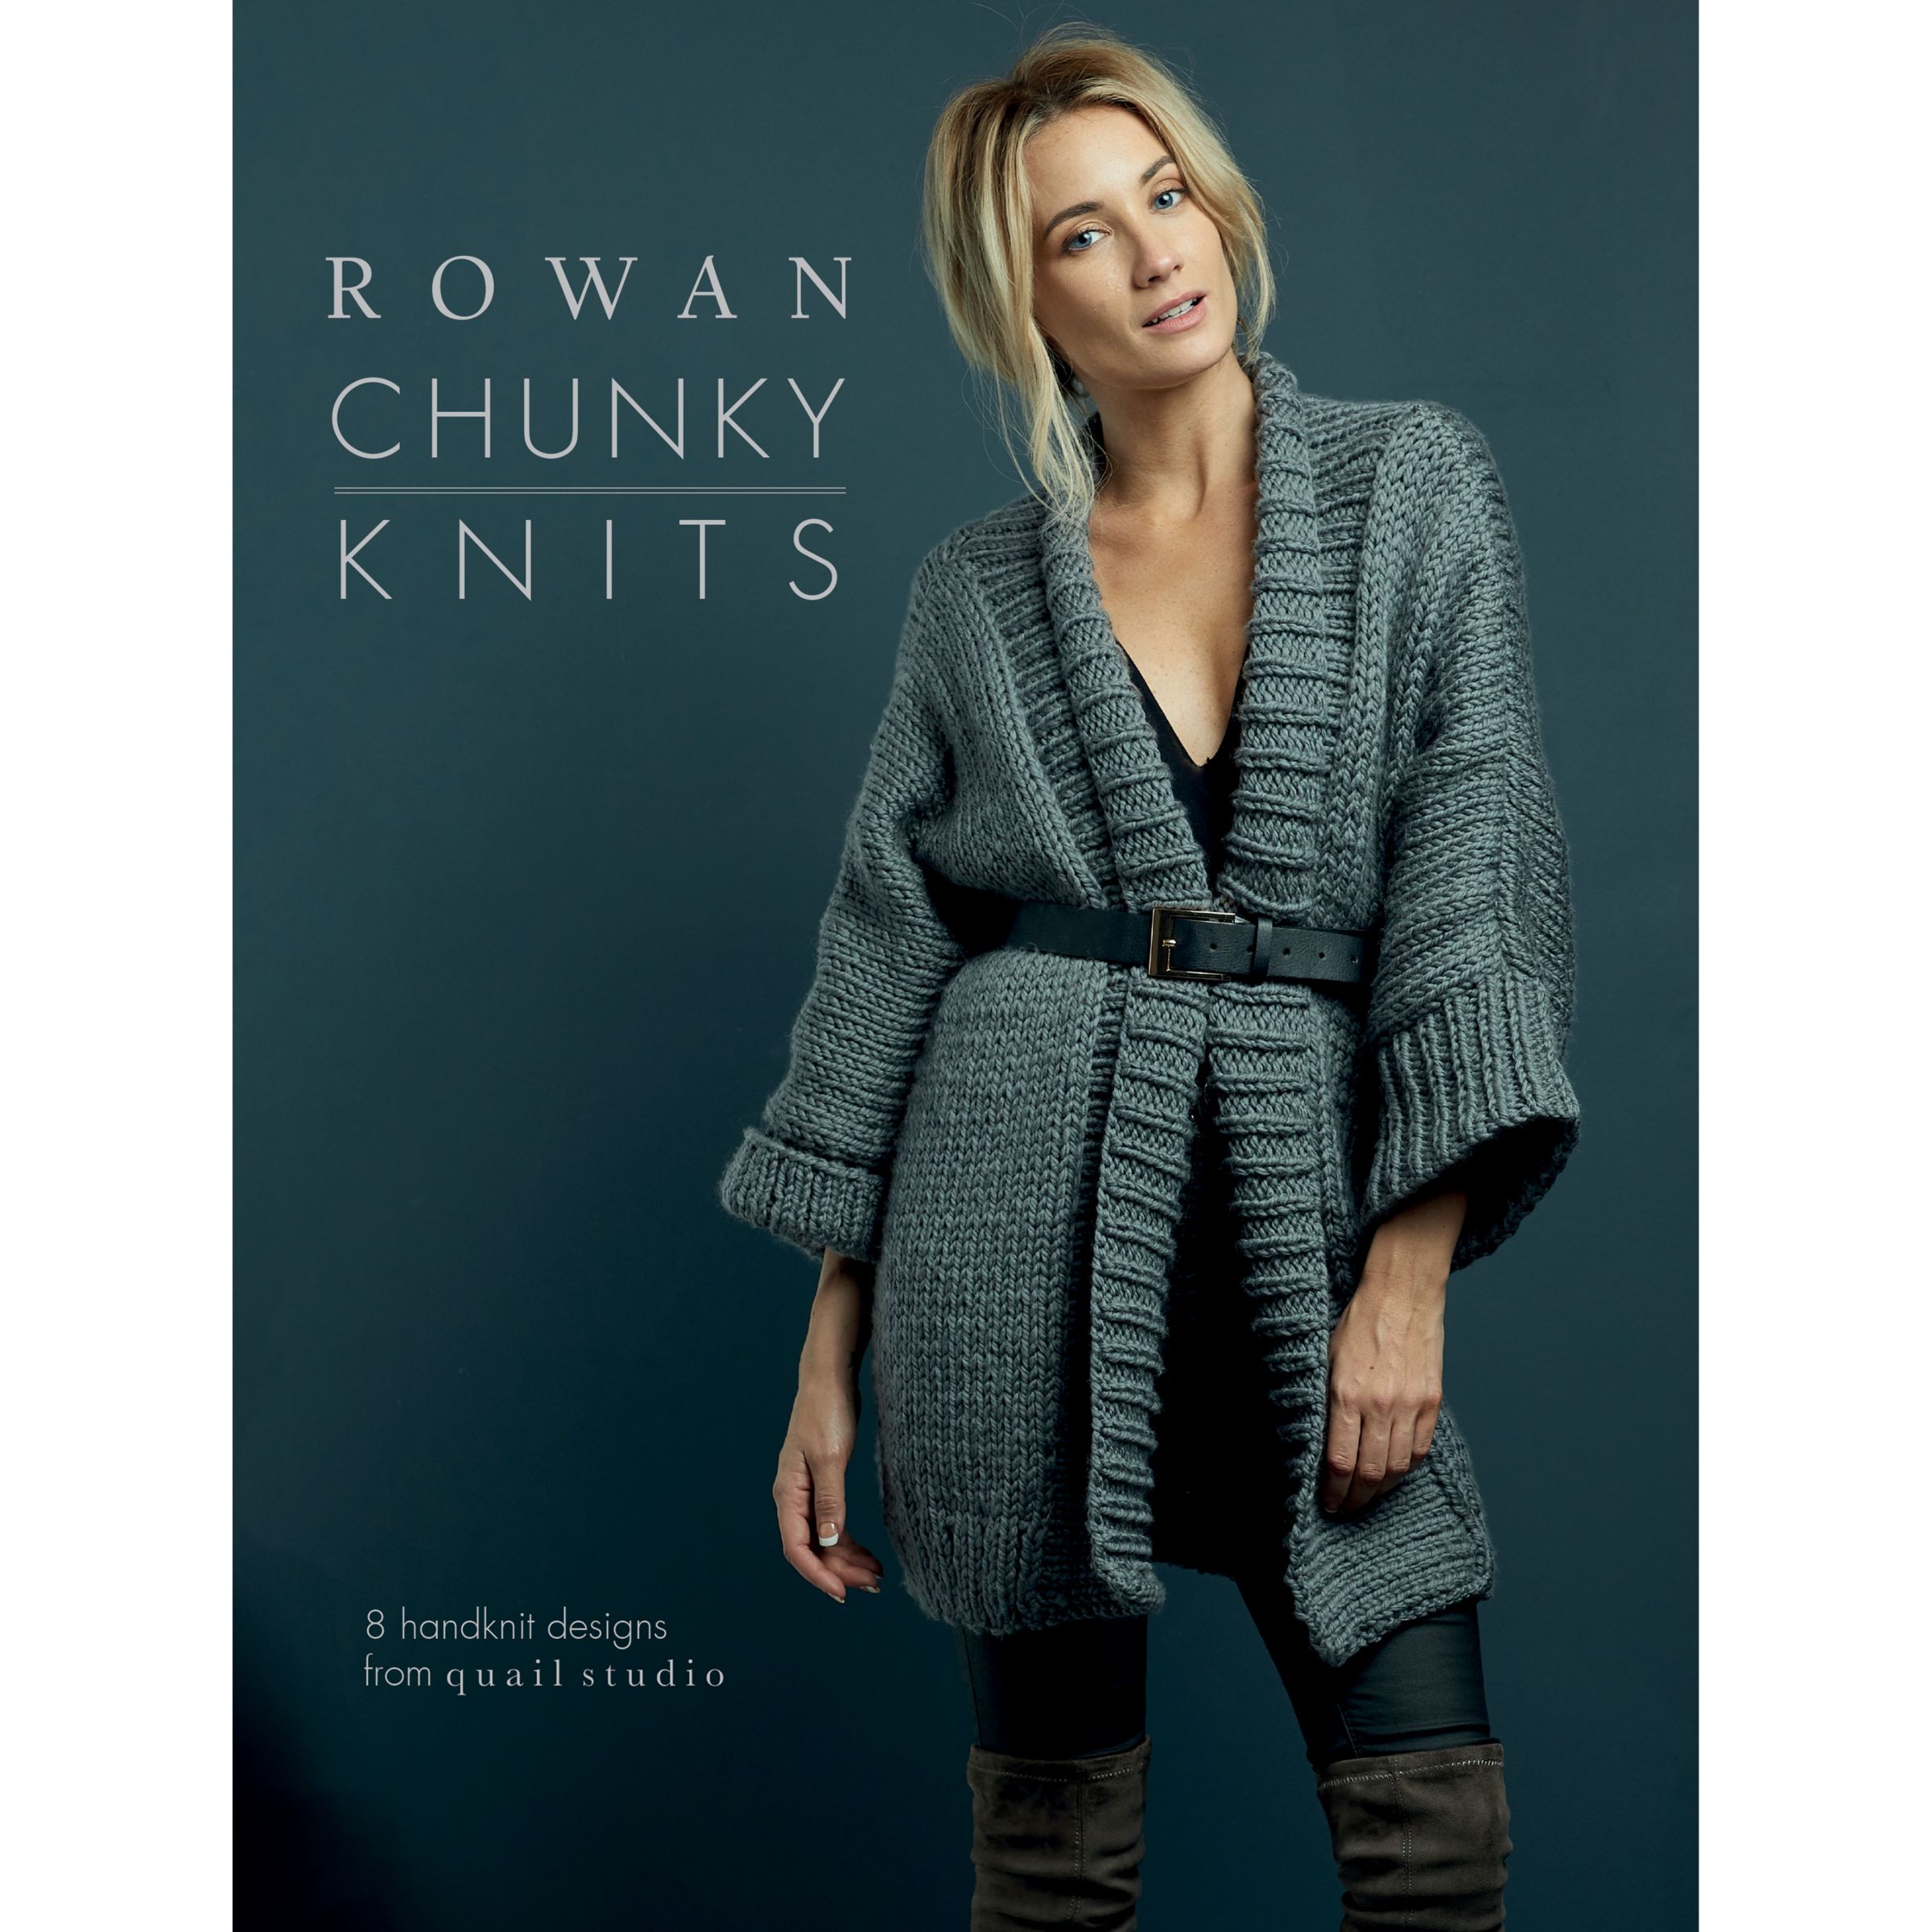 Chunky knit patterns free online